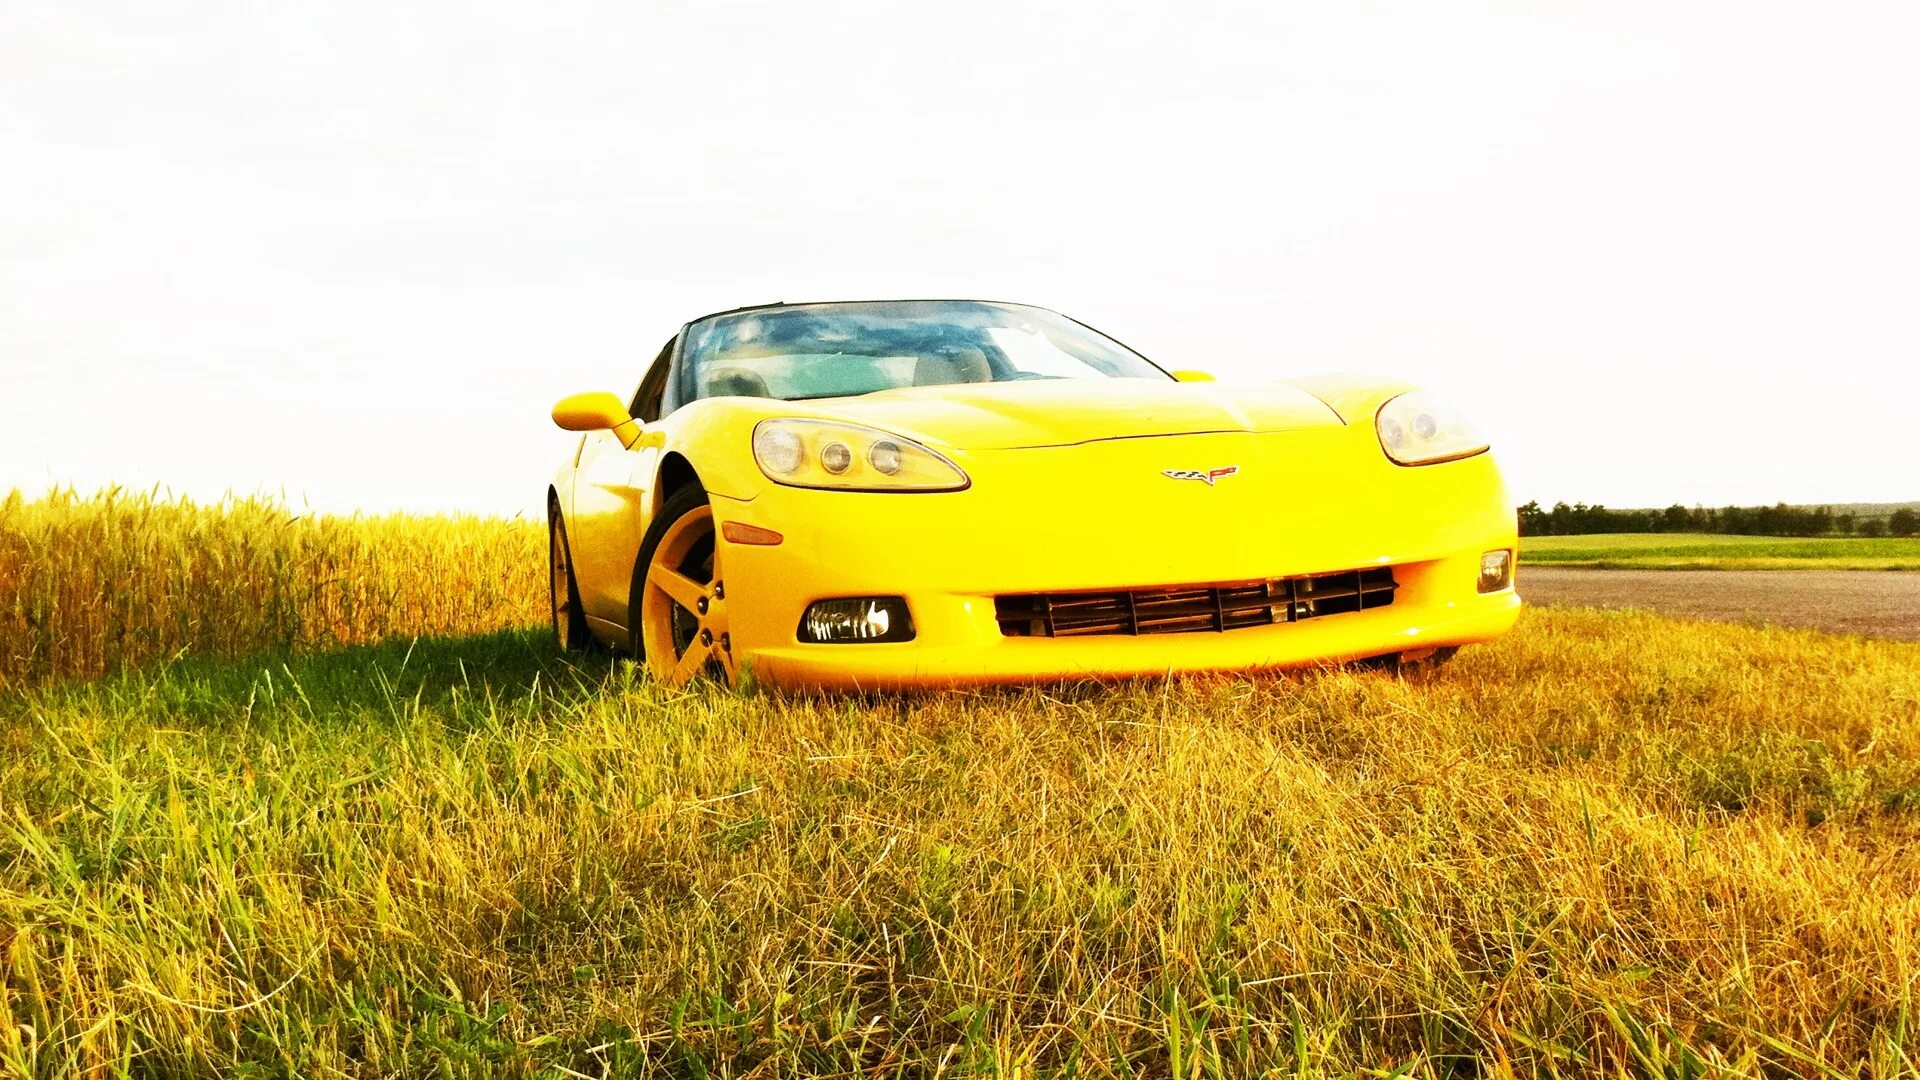 Какая машина у мажора в 1. Chevrolet Corvette c6 мажор. Желтая тачка. Машина в мажоре желтая. Мажор машина Игоря желтая.